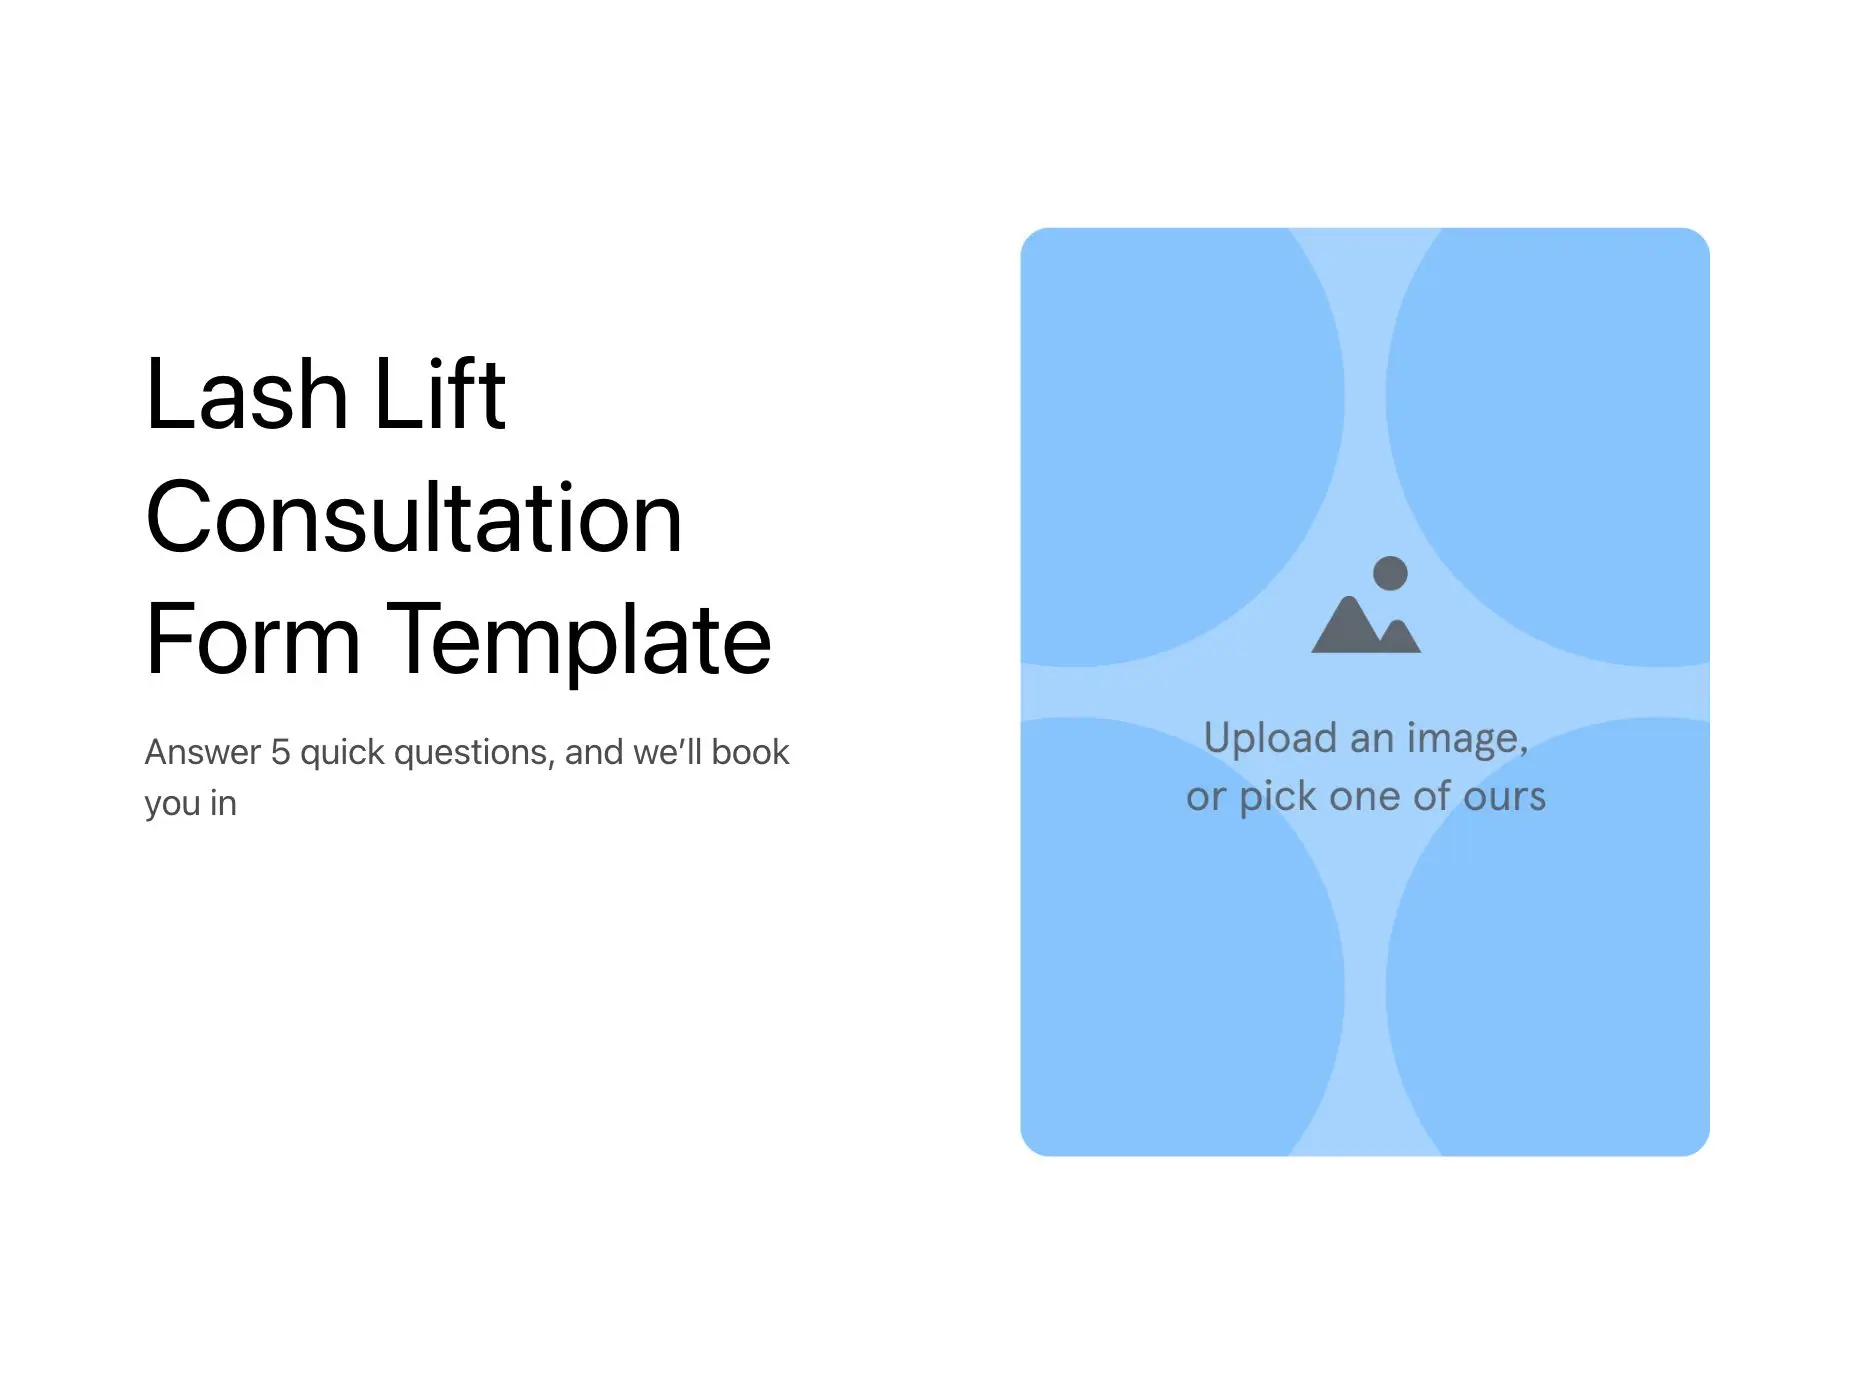 Lash Lift Consultation Form Template Hero